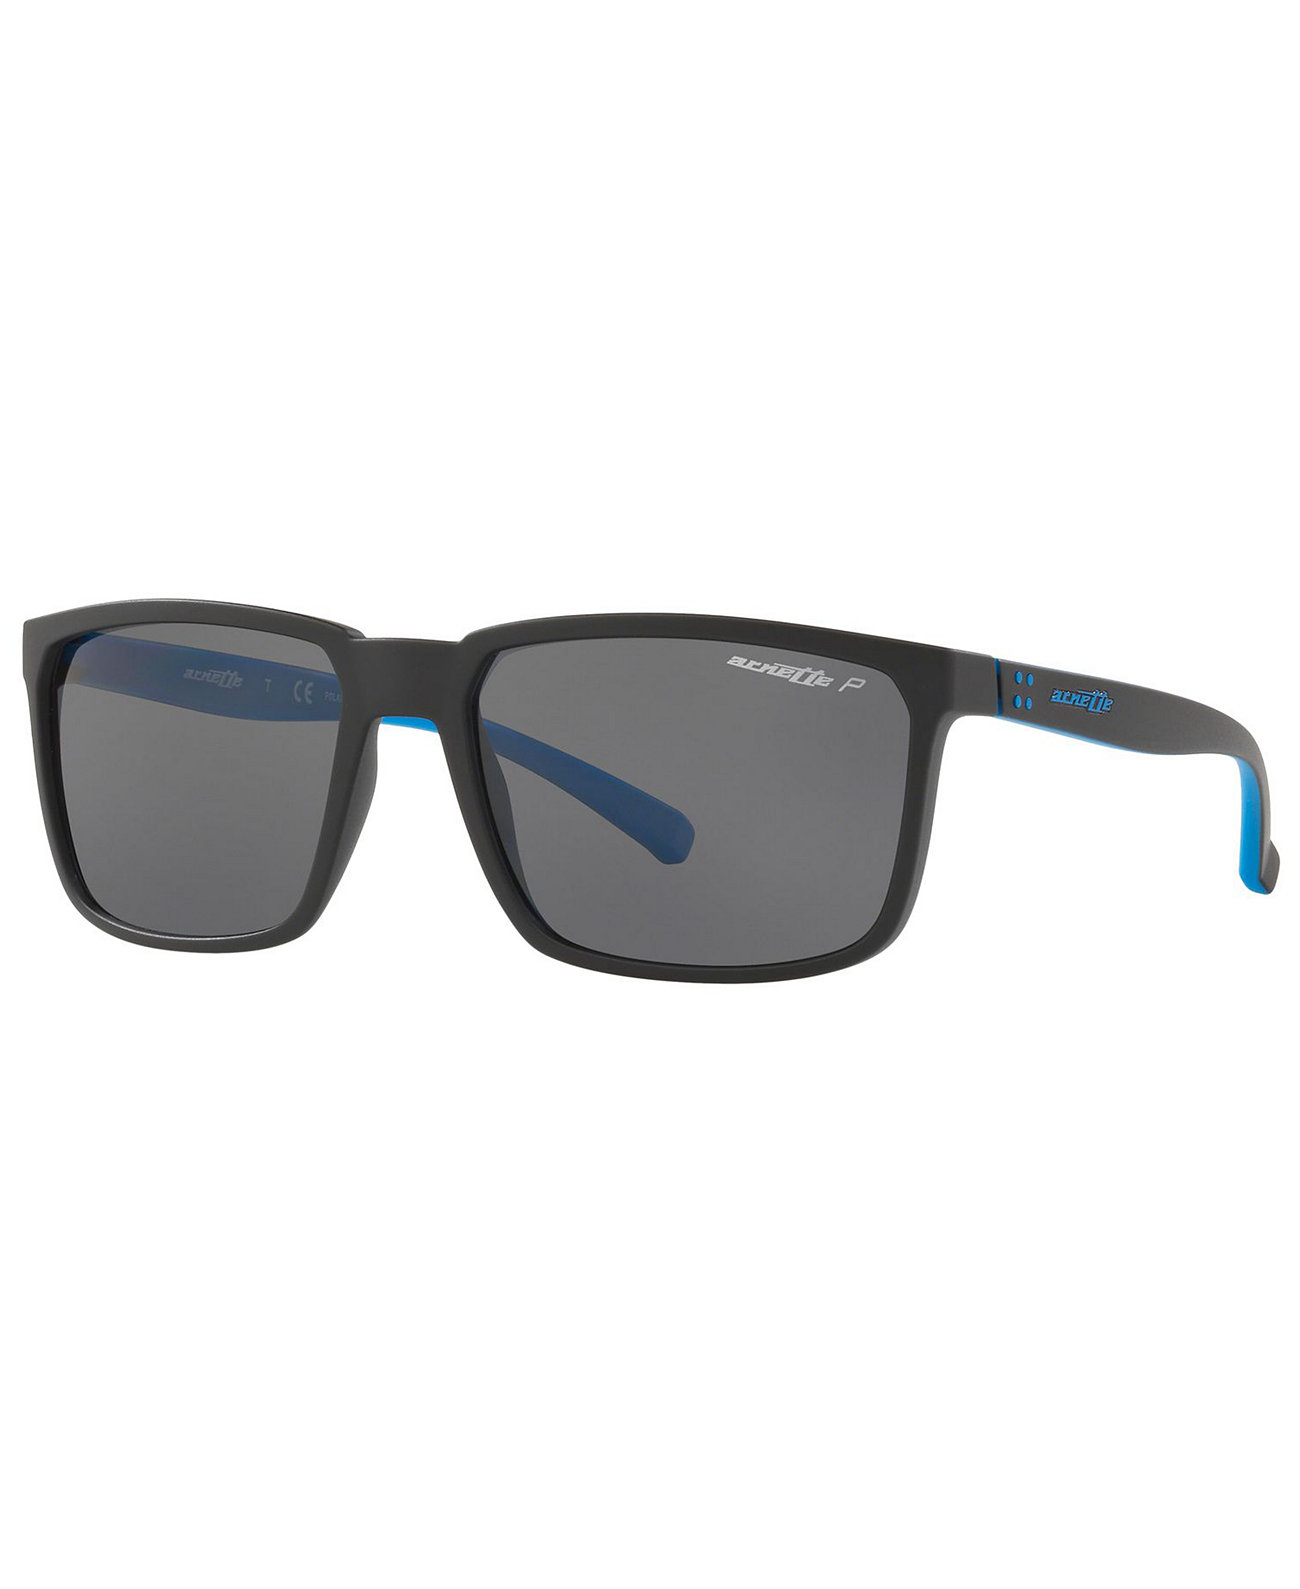 Поляризованные солнцезащитные очки, AN4251 58 STRIPE Arnette